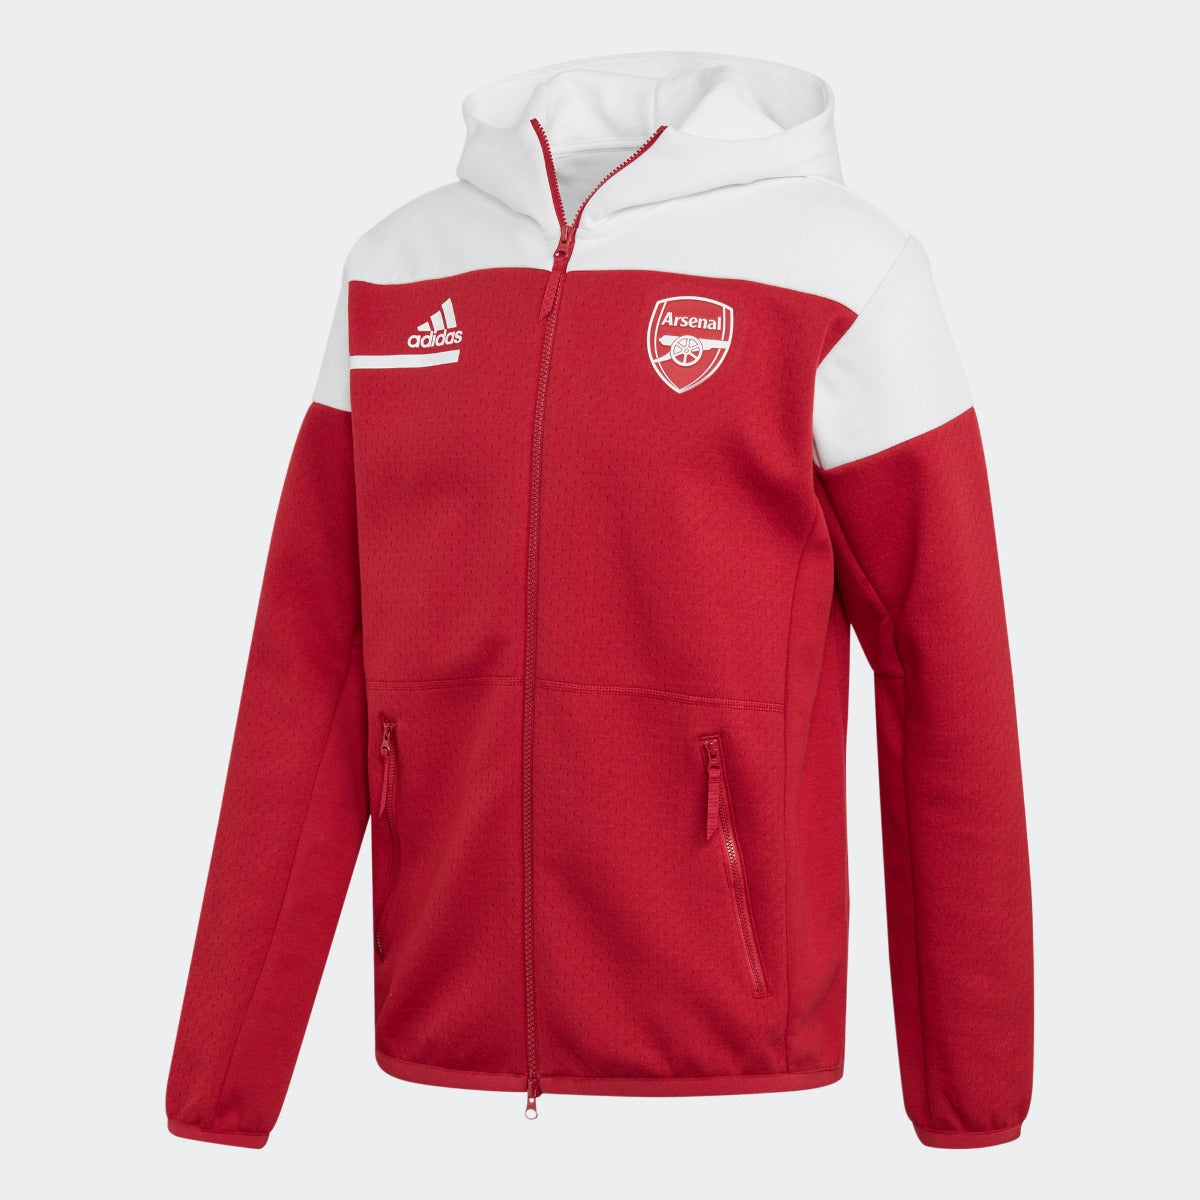 Adidas 2021 Arsenal Zone Jackets - Red-White